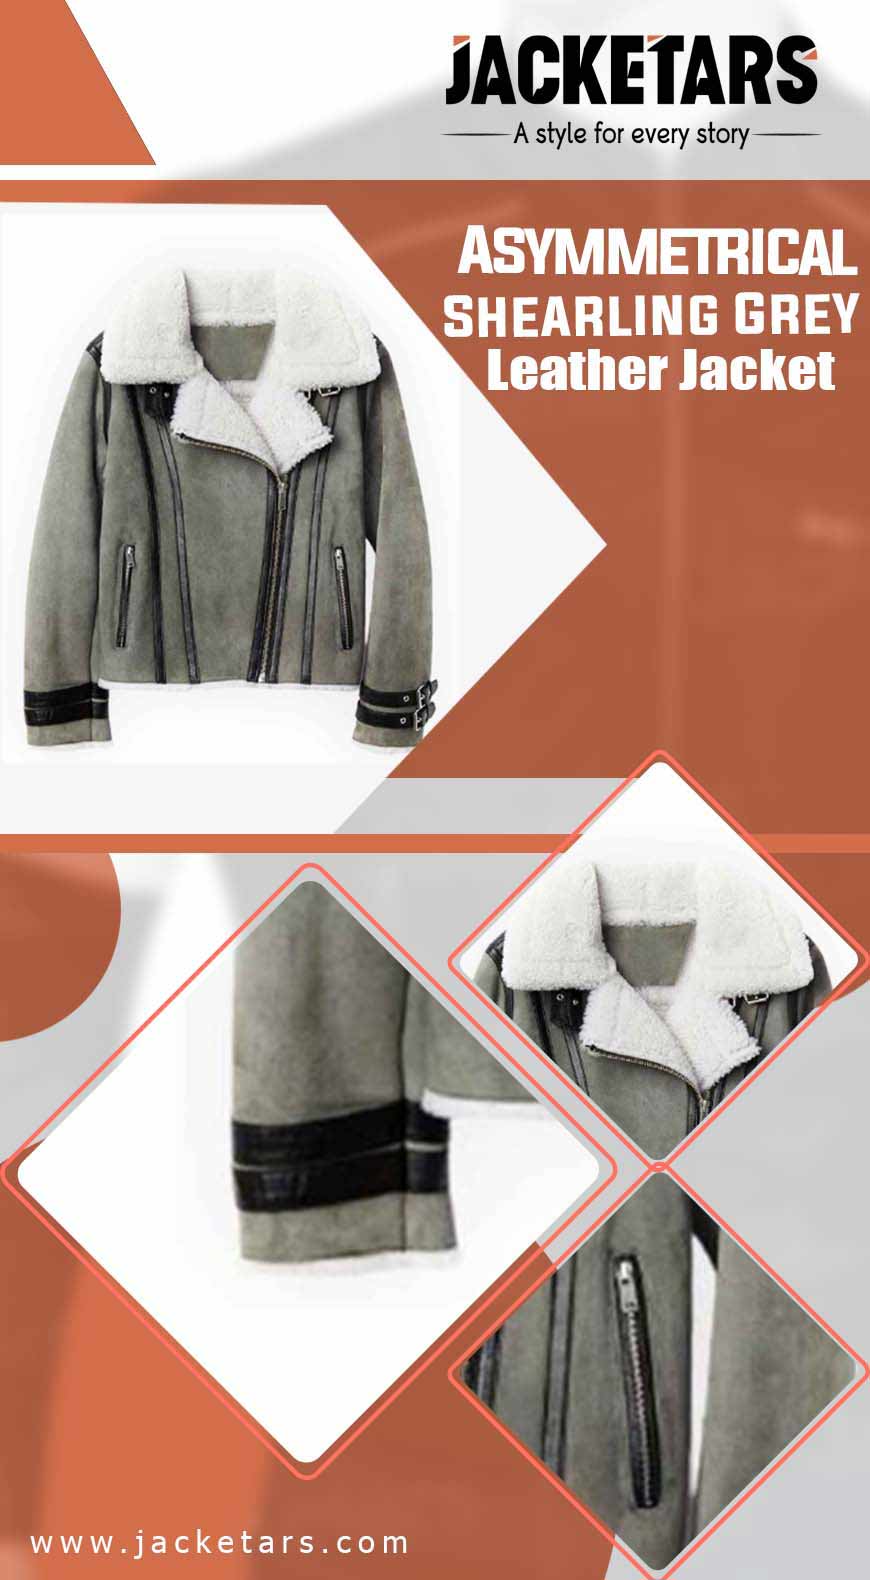 Asymmetrical Shearling Grey Leather Jacket info